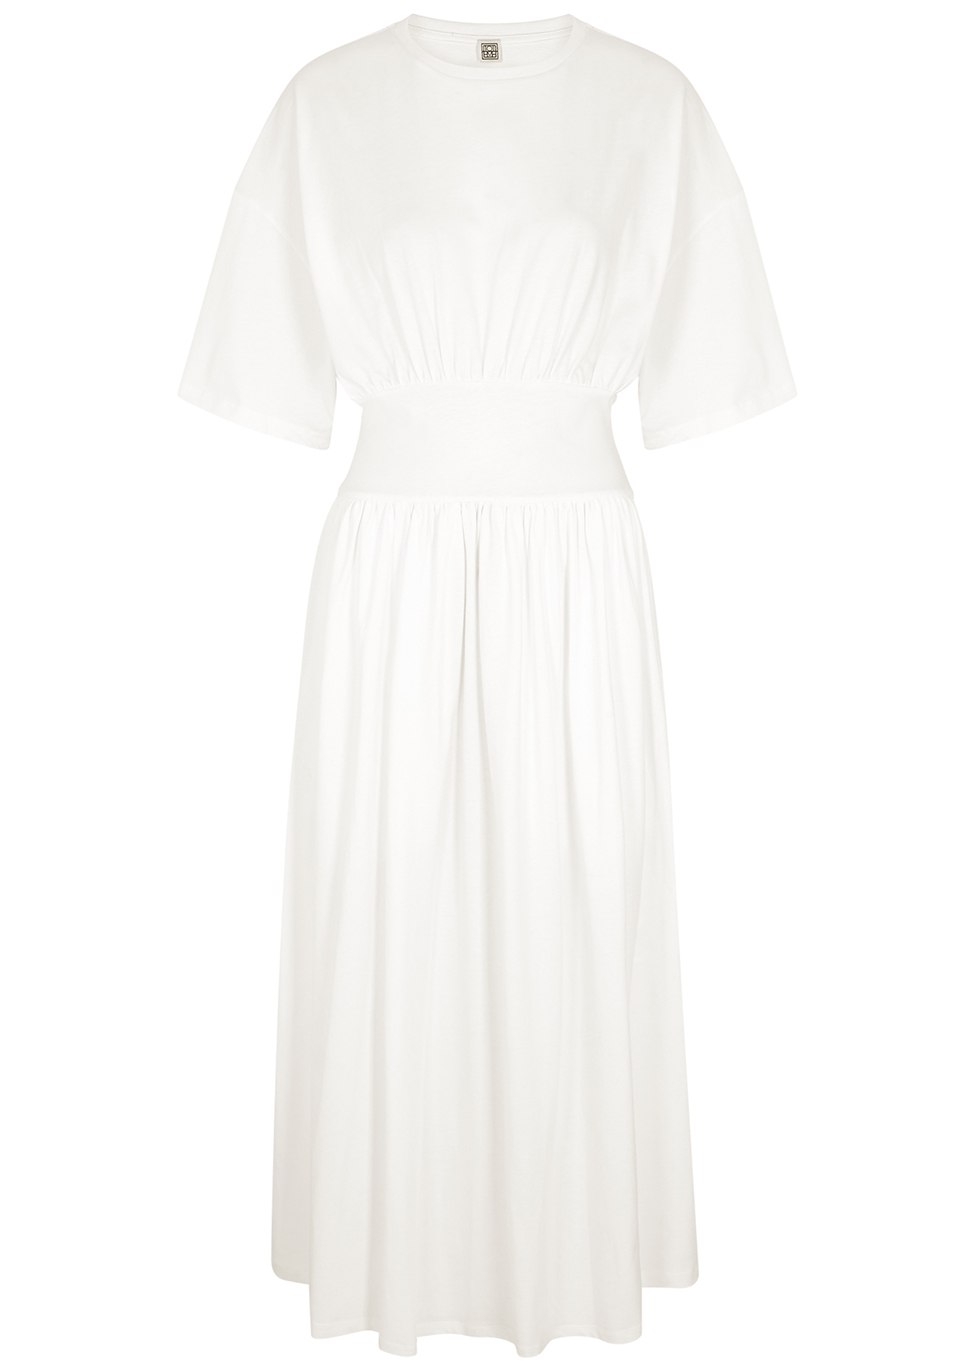 Totême White cotton maxi dress - Harvey Nichols